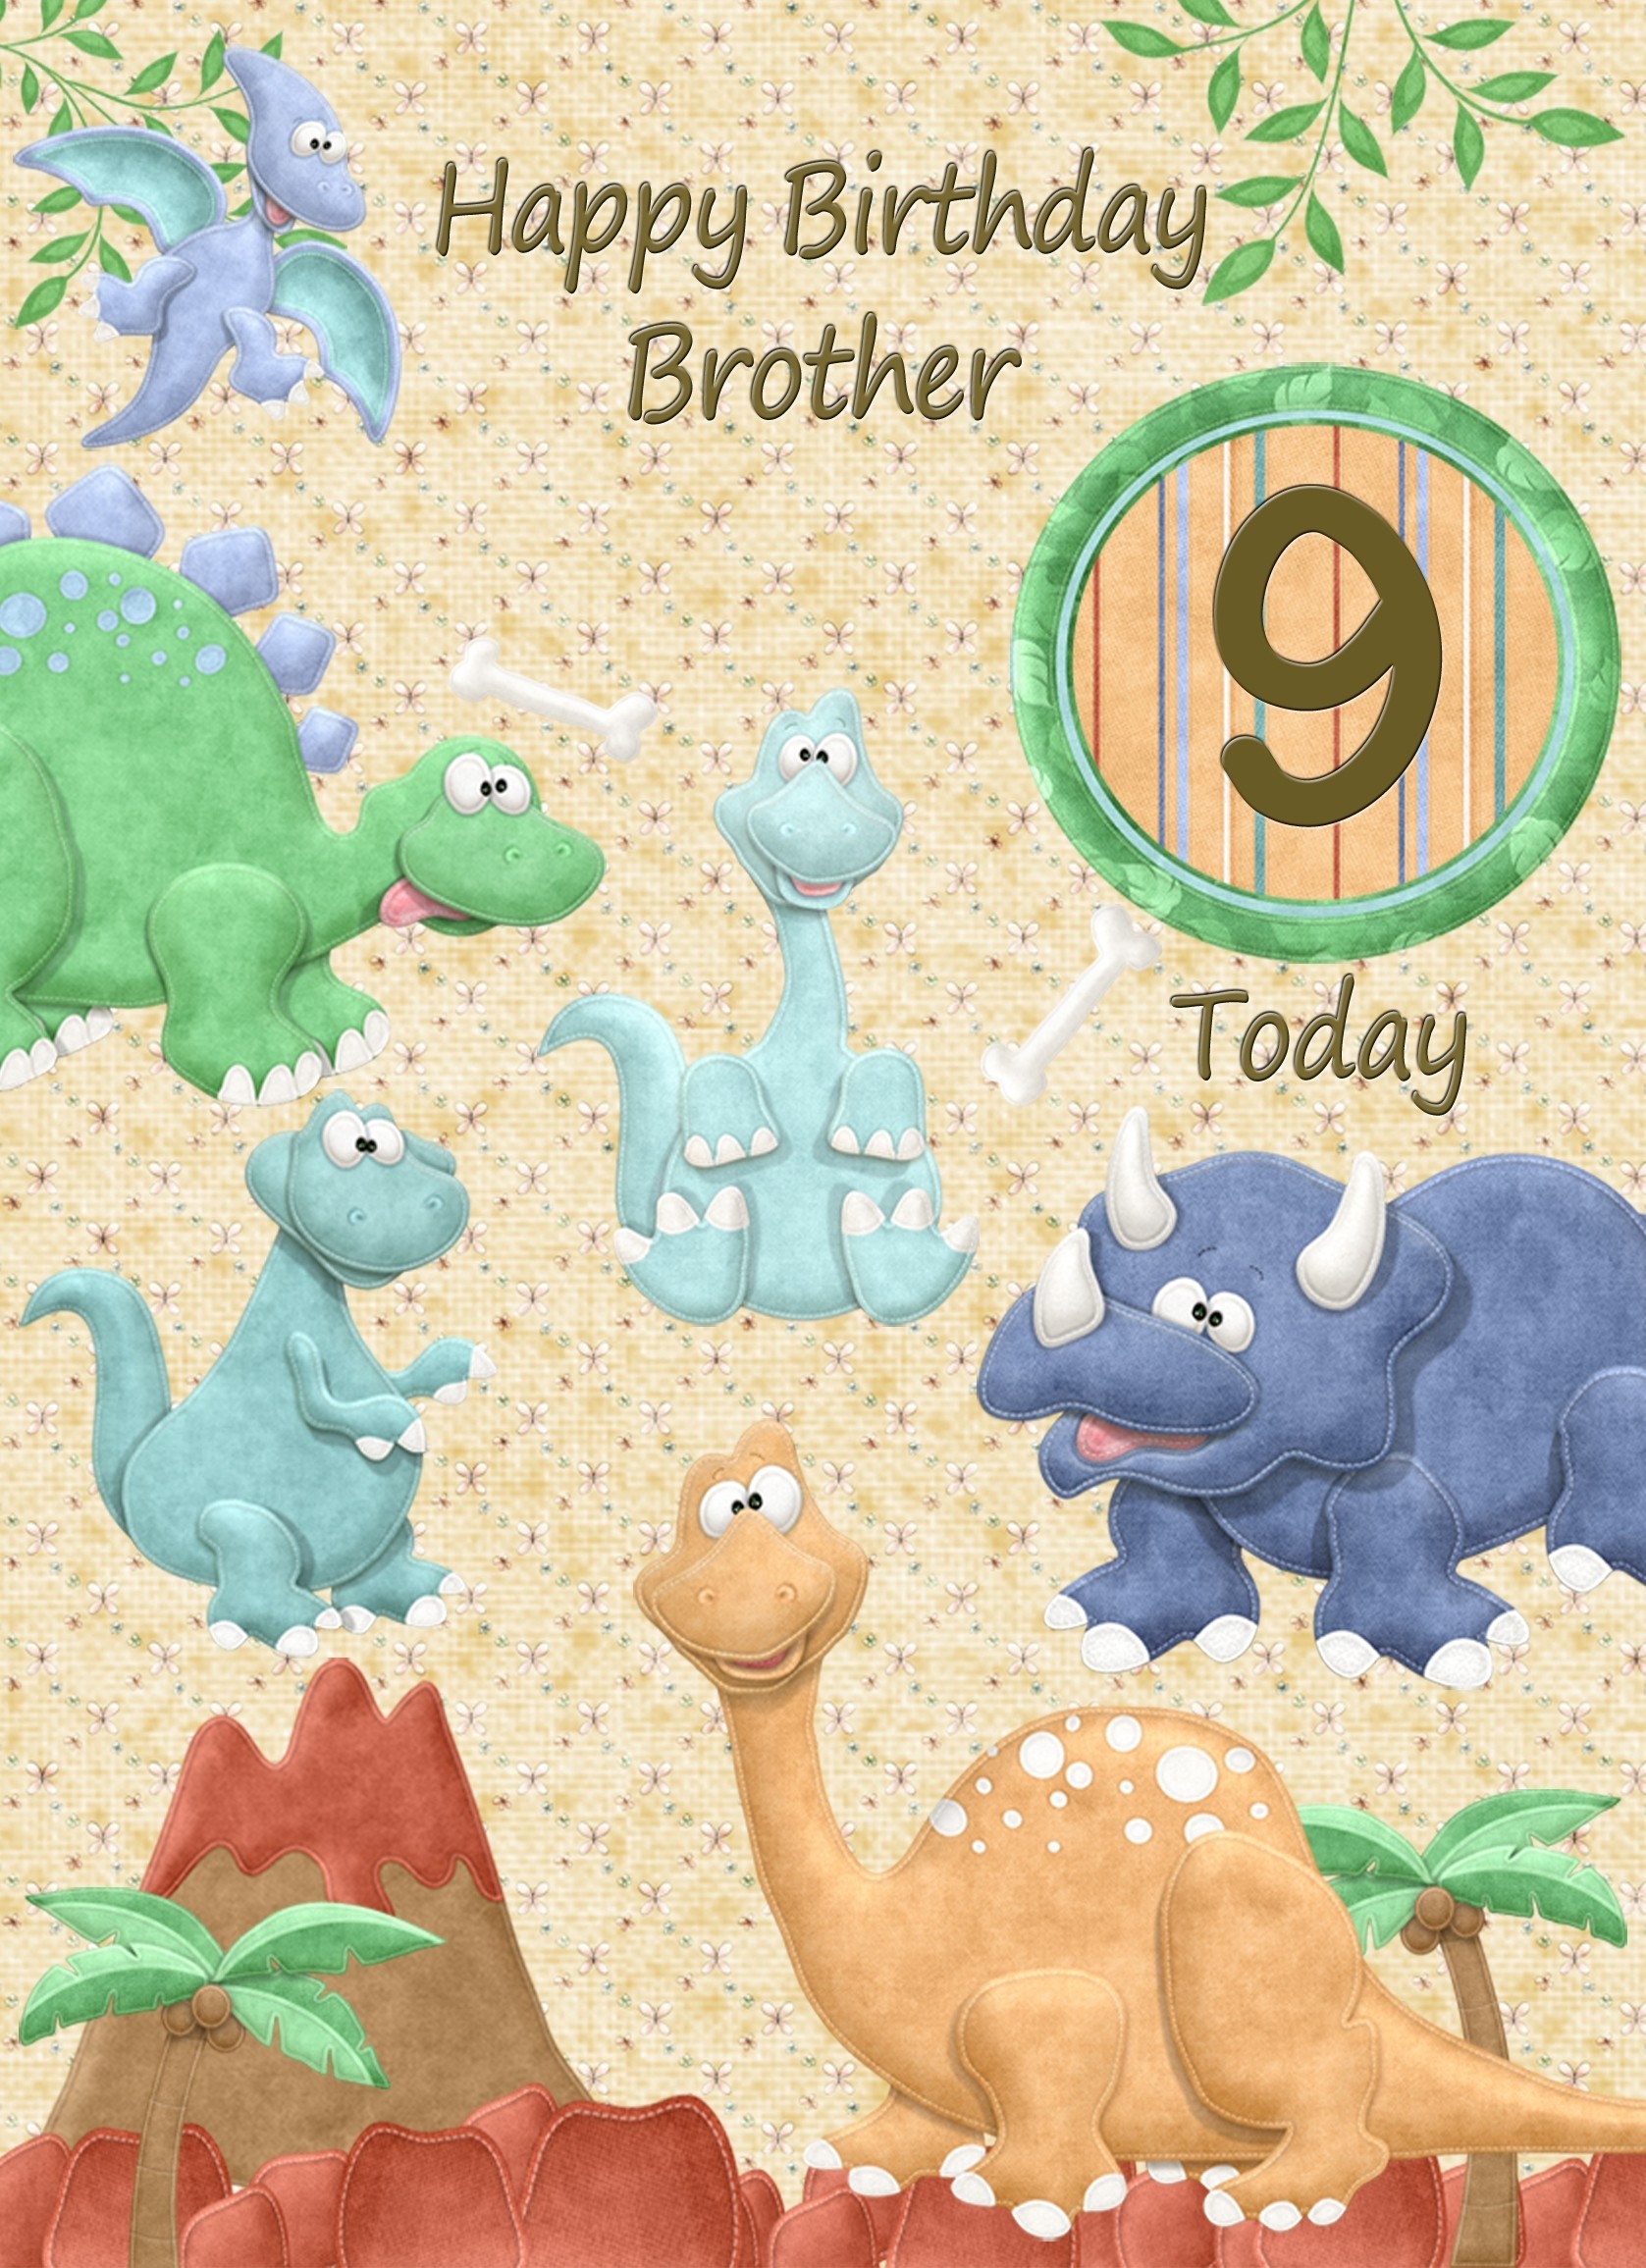 Kids 9th Birthday Dinosaur Cartoon Card for Brother